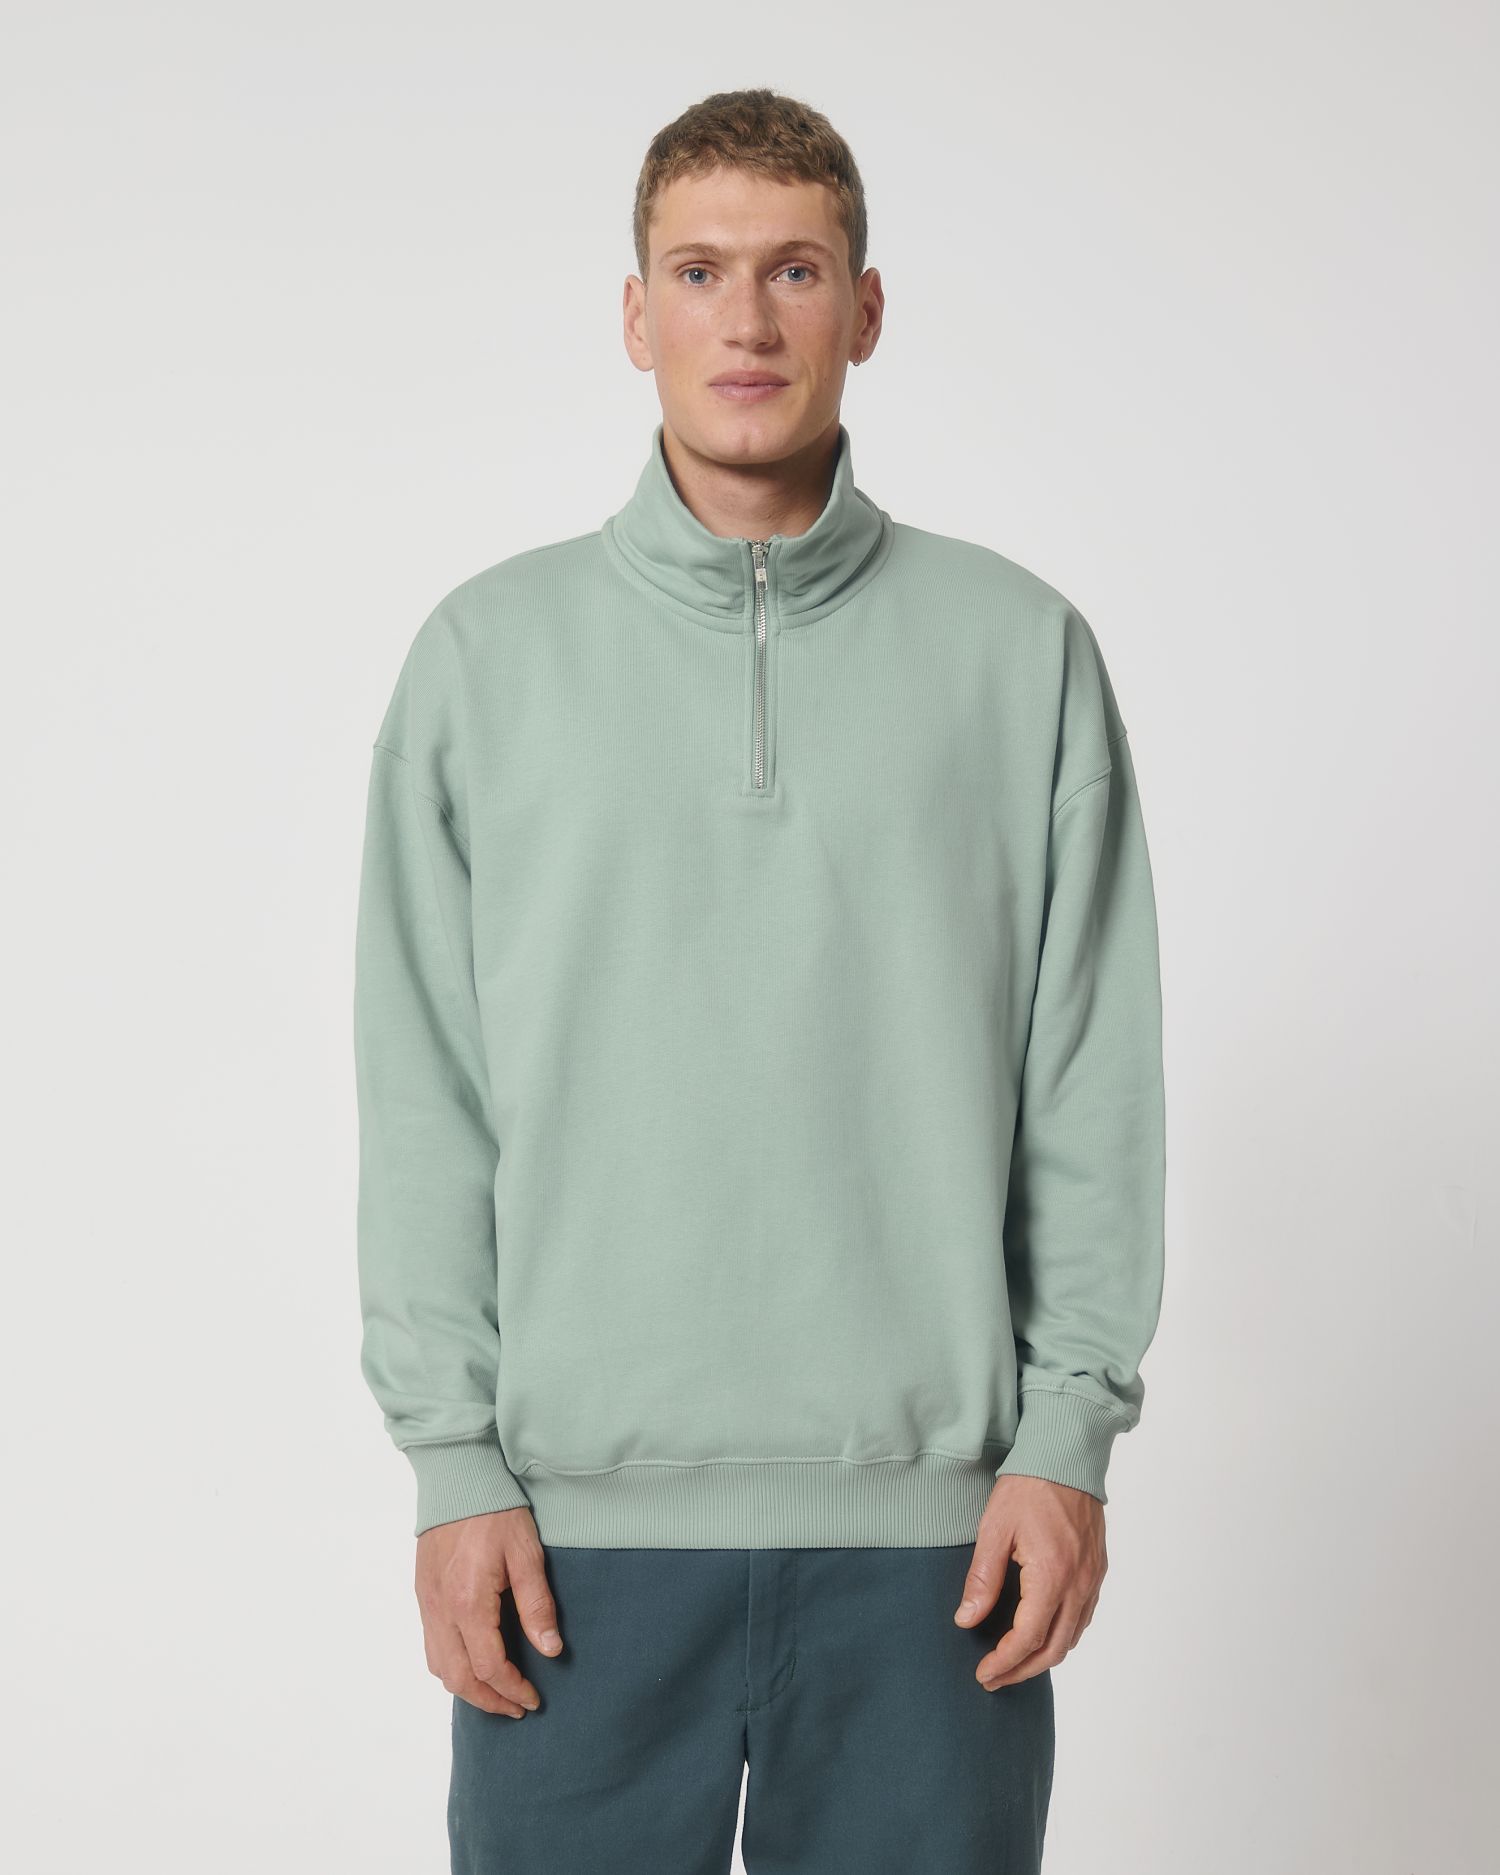 Crew neck sweatshirts Miller Dry in Farbe Aloe